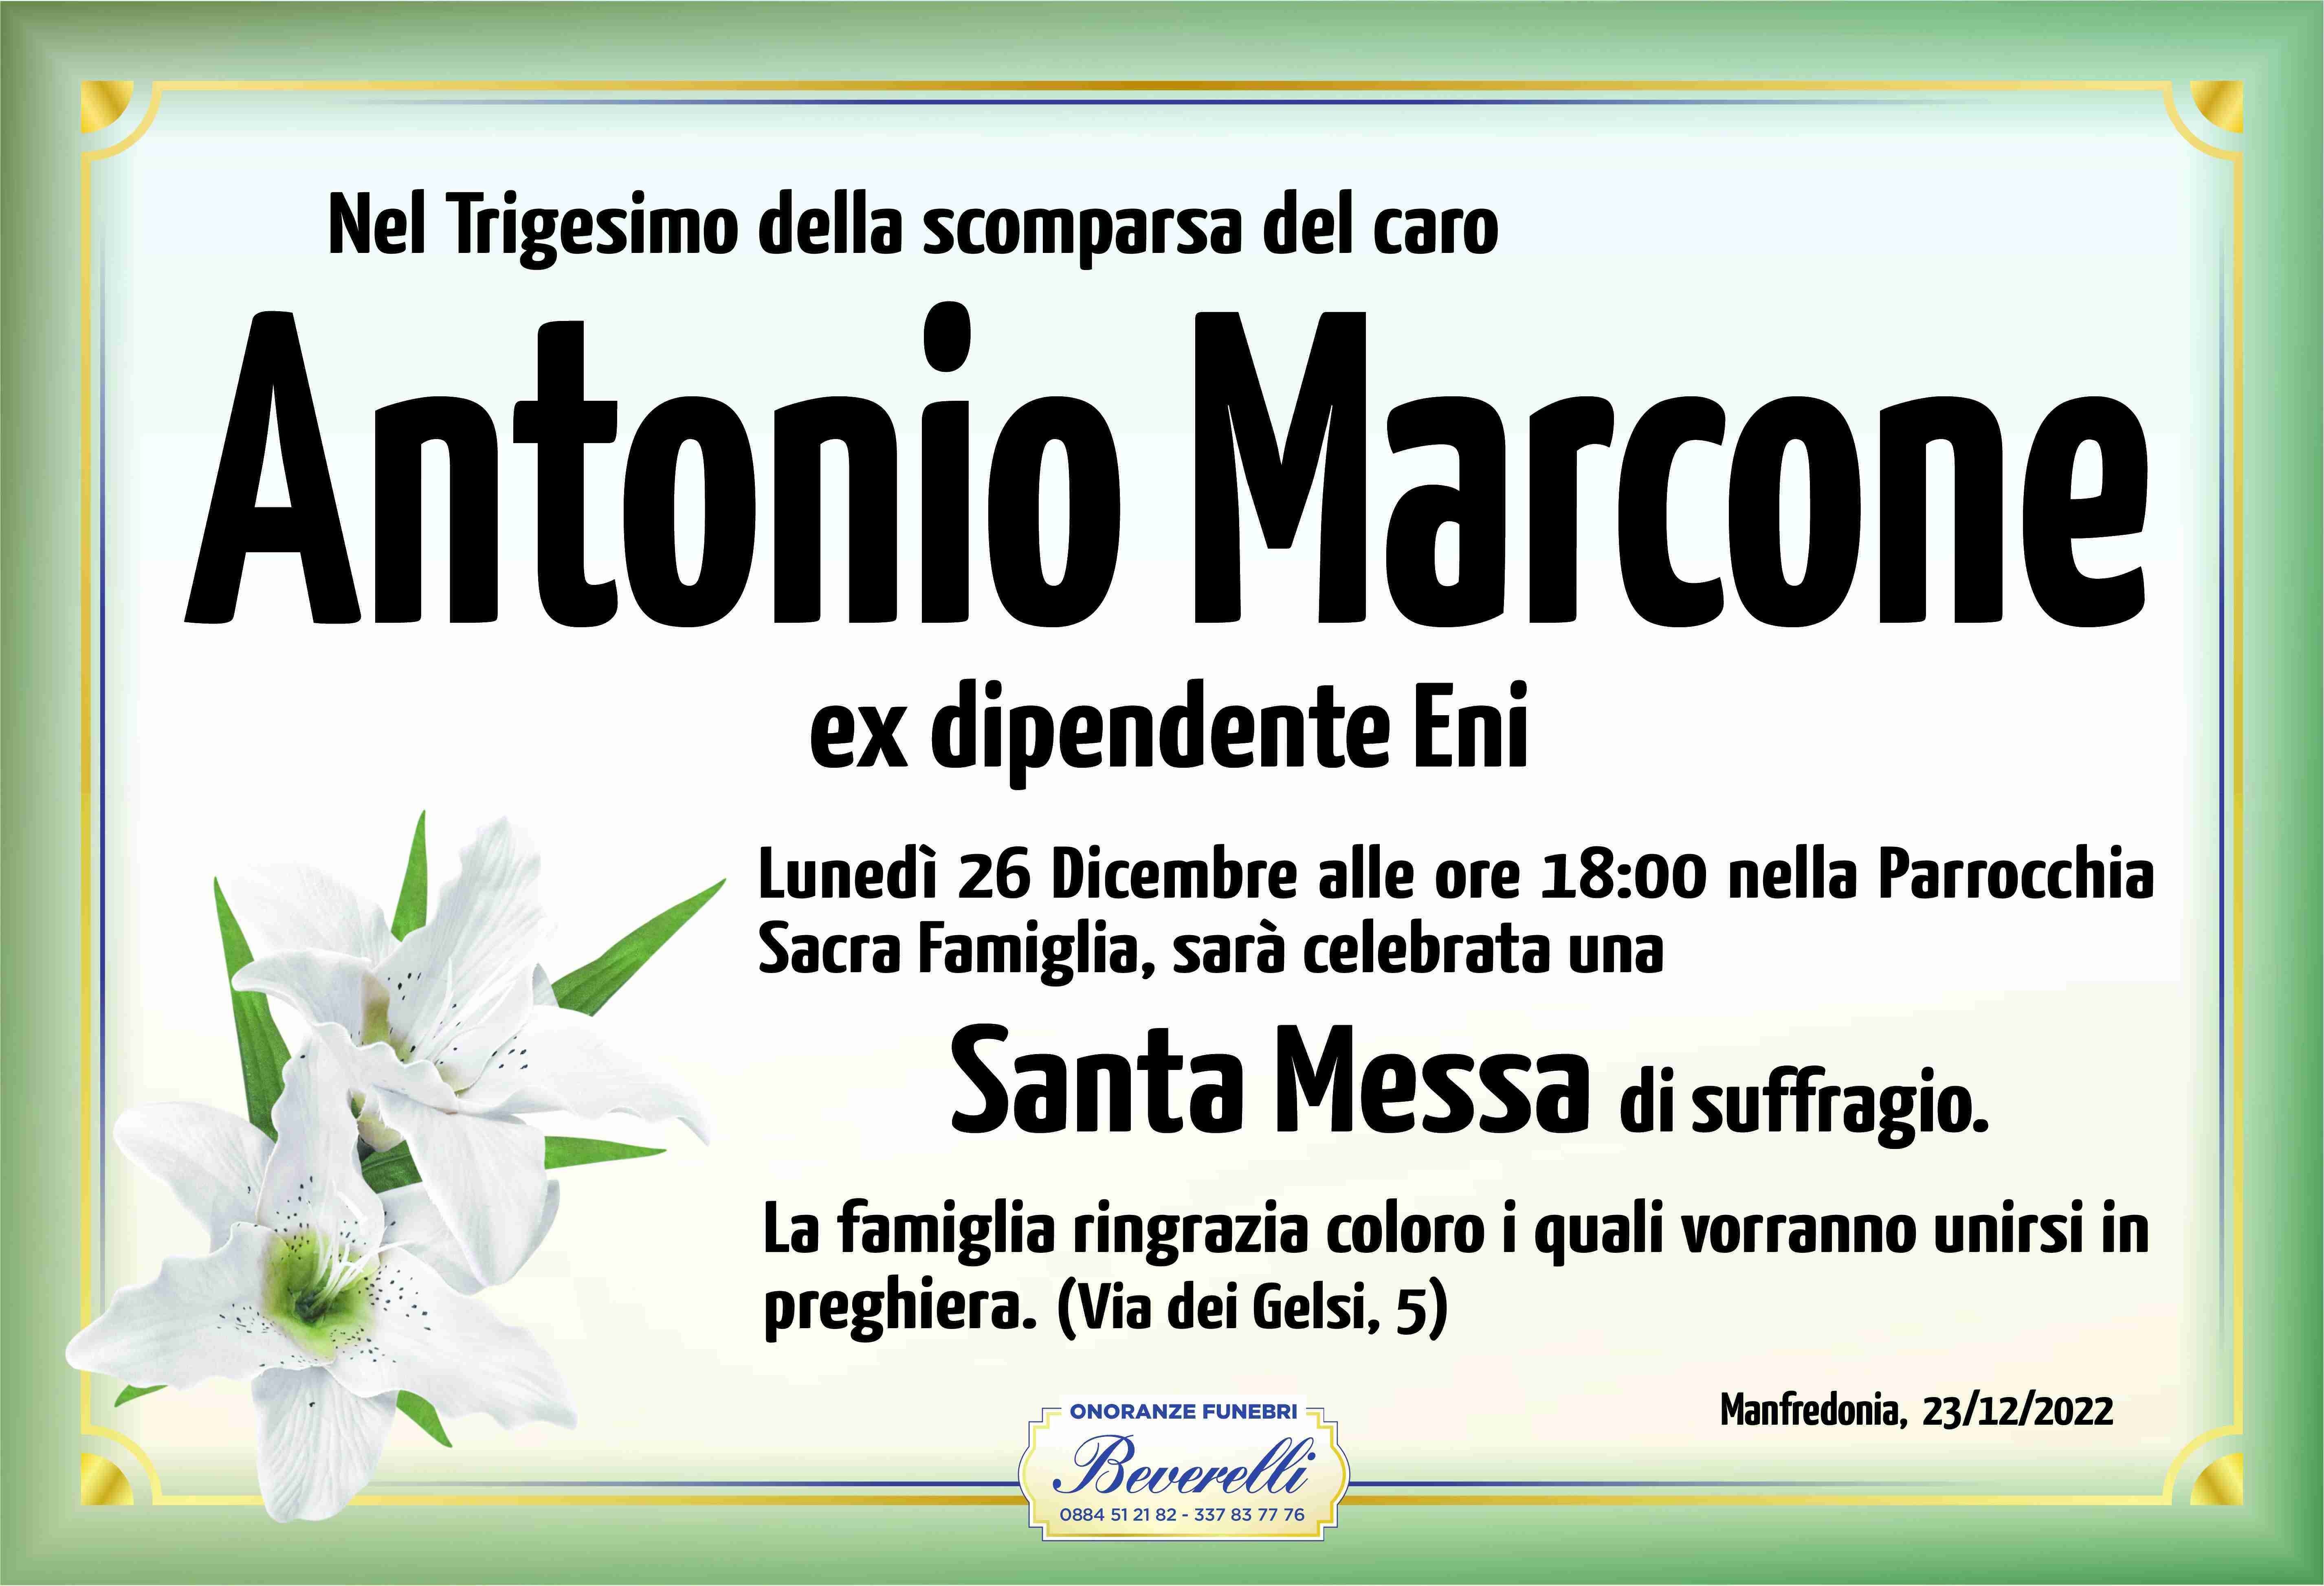 Antonio Marcone